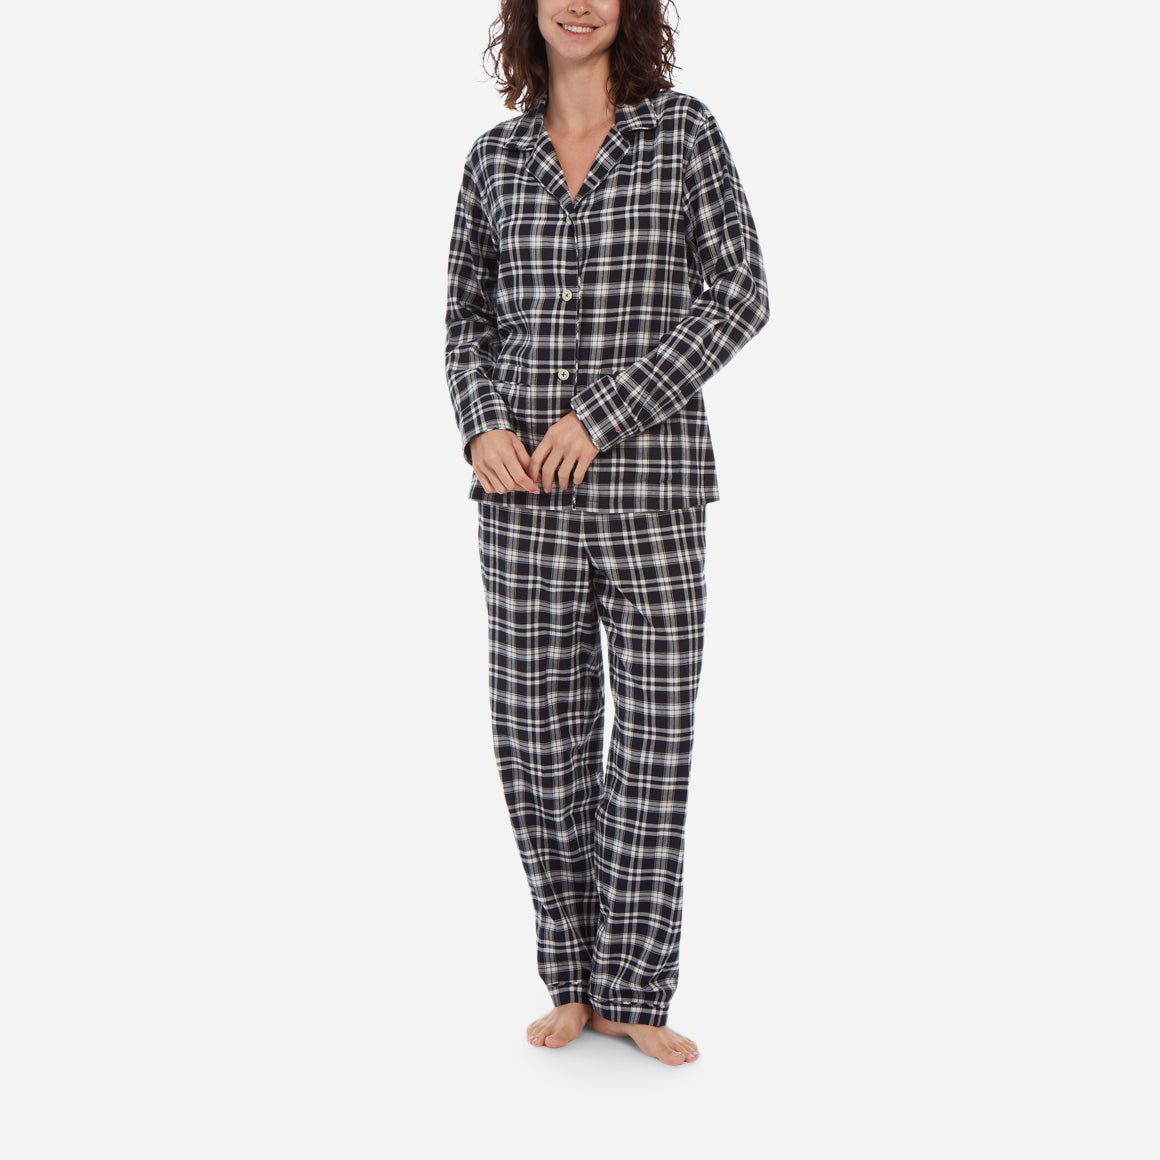 Female model image wearing black and white plaid flannel long sleeve pajama set.